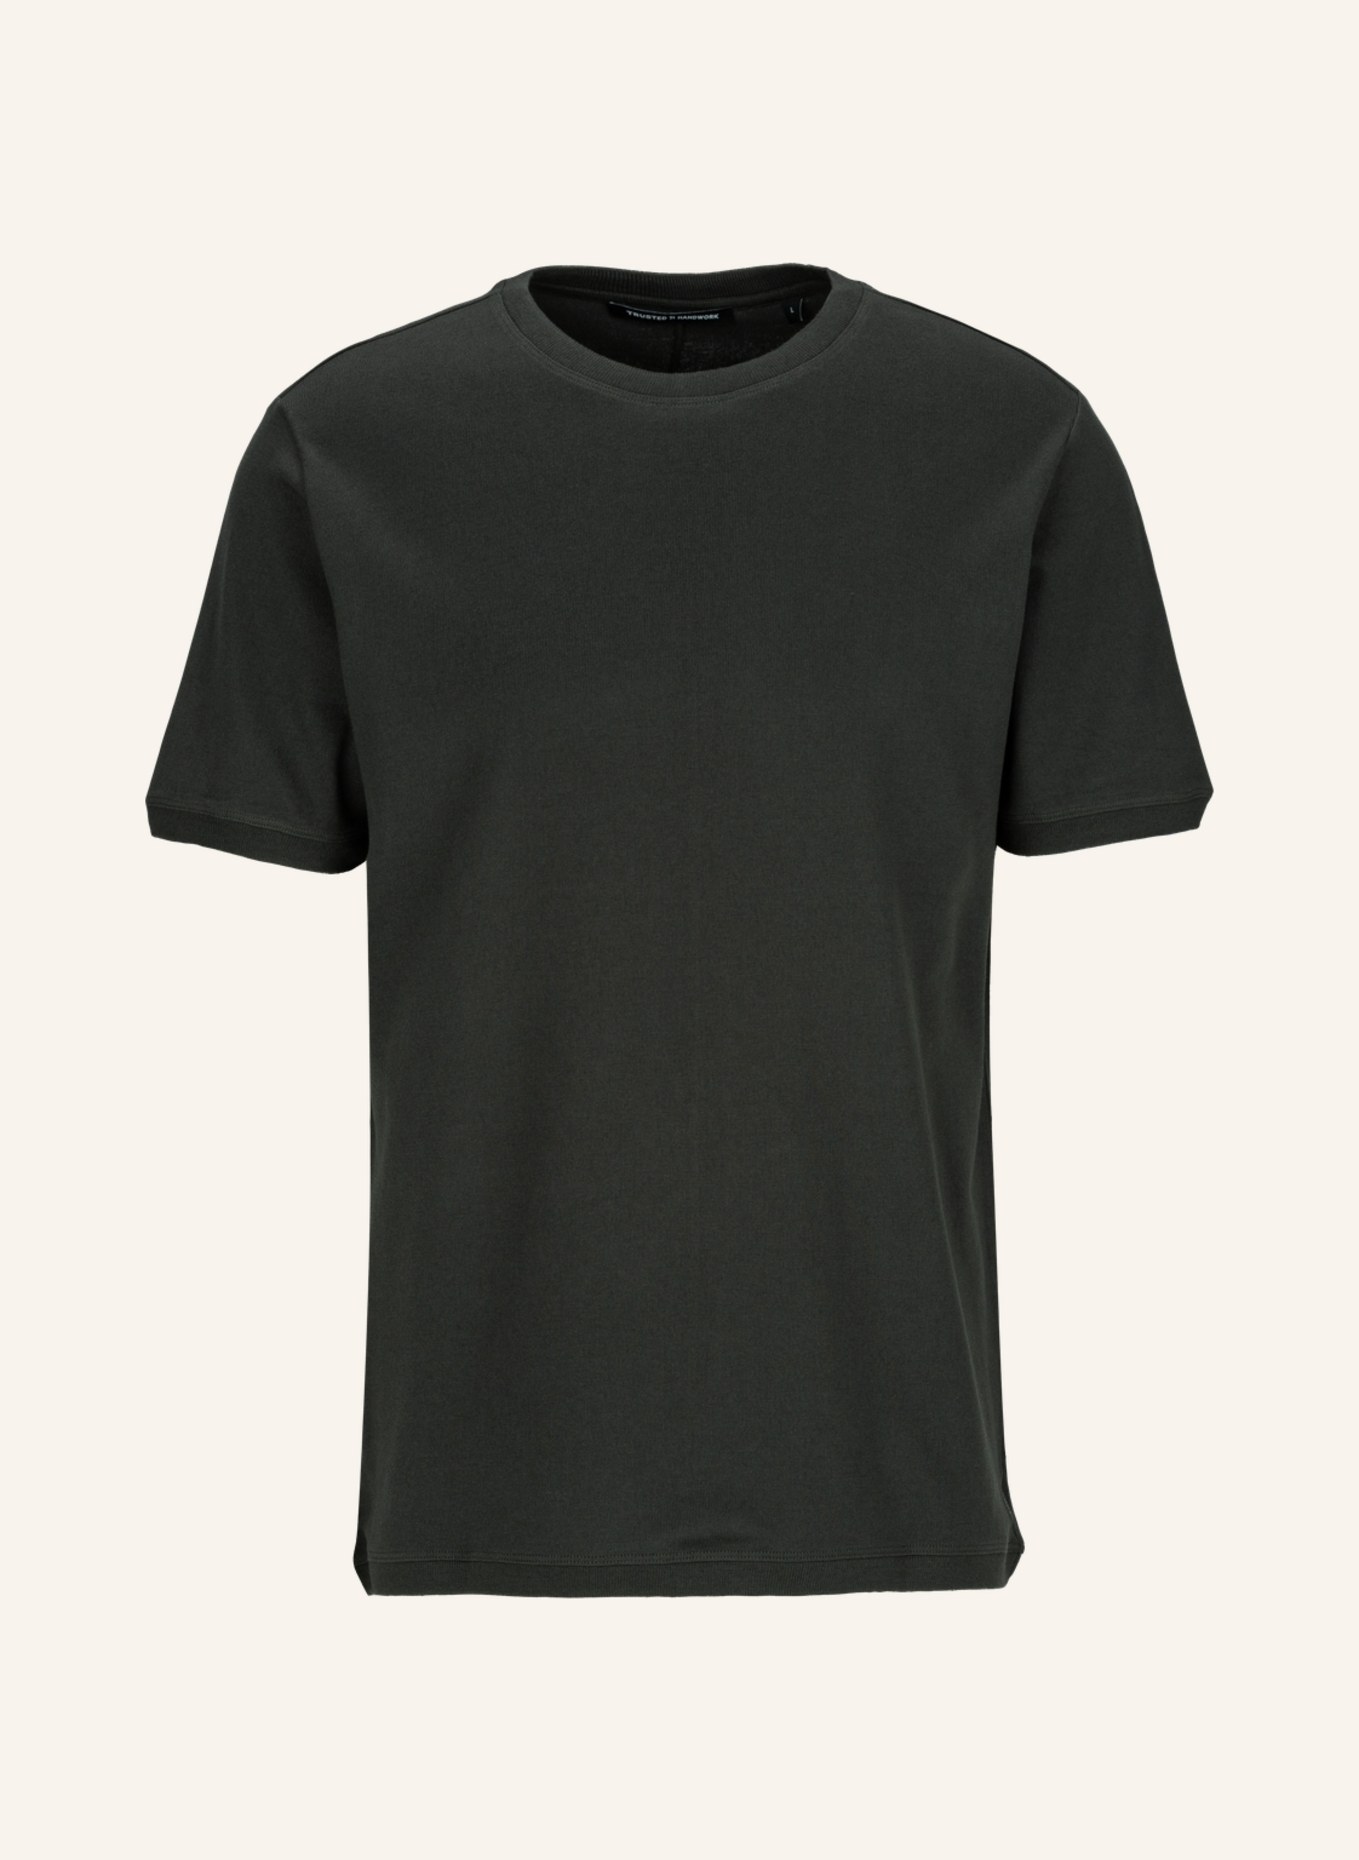 TRUSTED HANDWORK T-Shirt SAN DIEGO, Farbe: GRÜN (Bild 1)